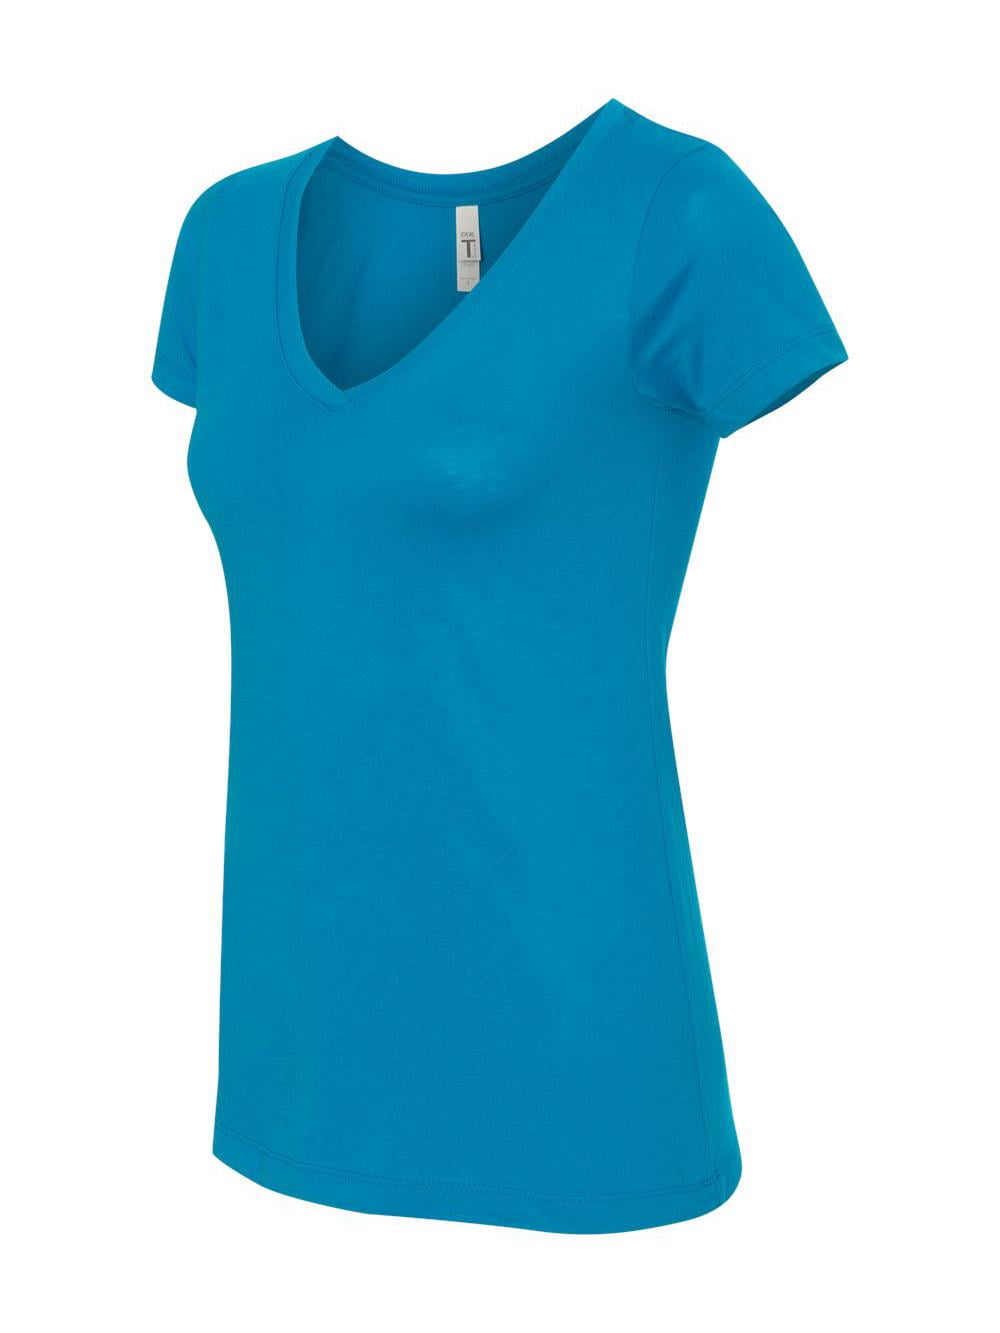 Next Level - Women's Ideal V-Neck T-Shirt - 1540 - Turquoise - Size: XL ...